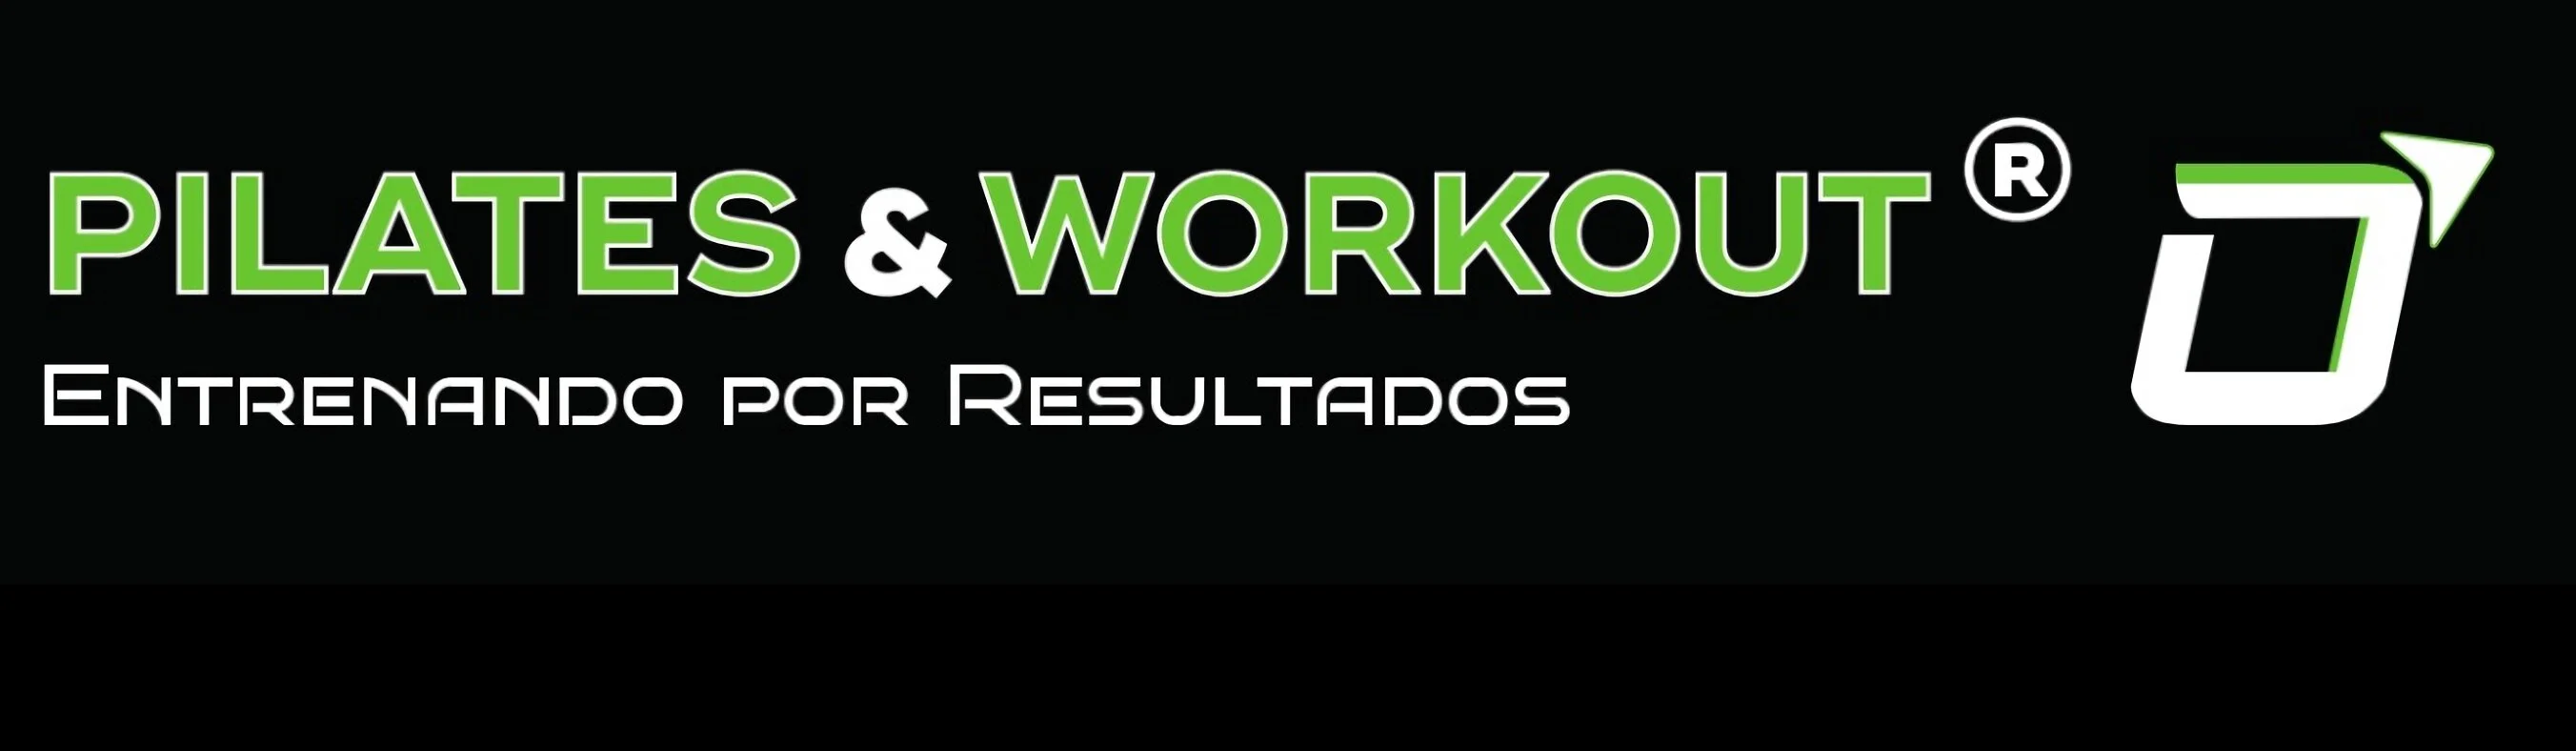 Pilates & WorkOut-635